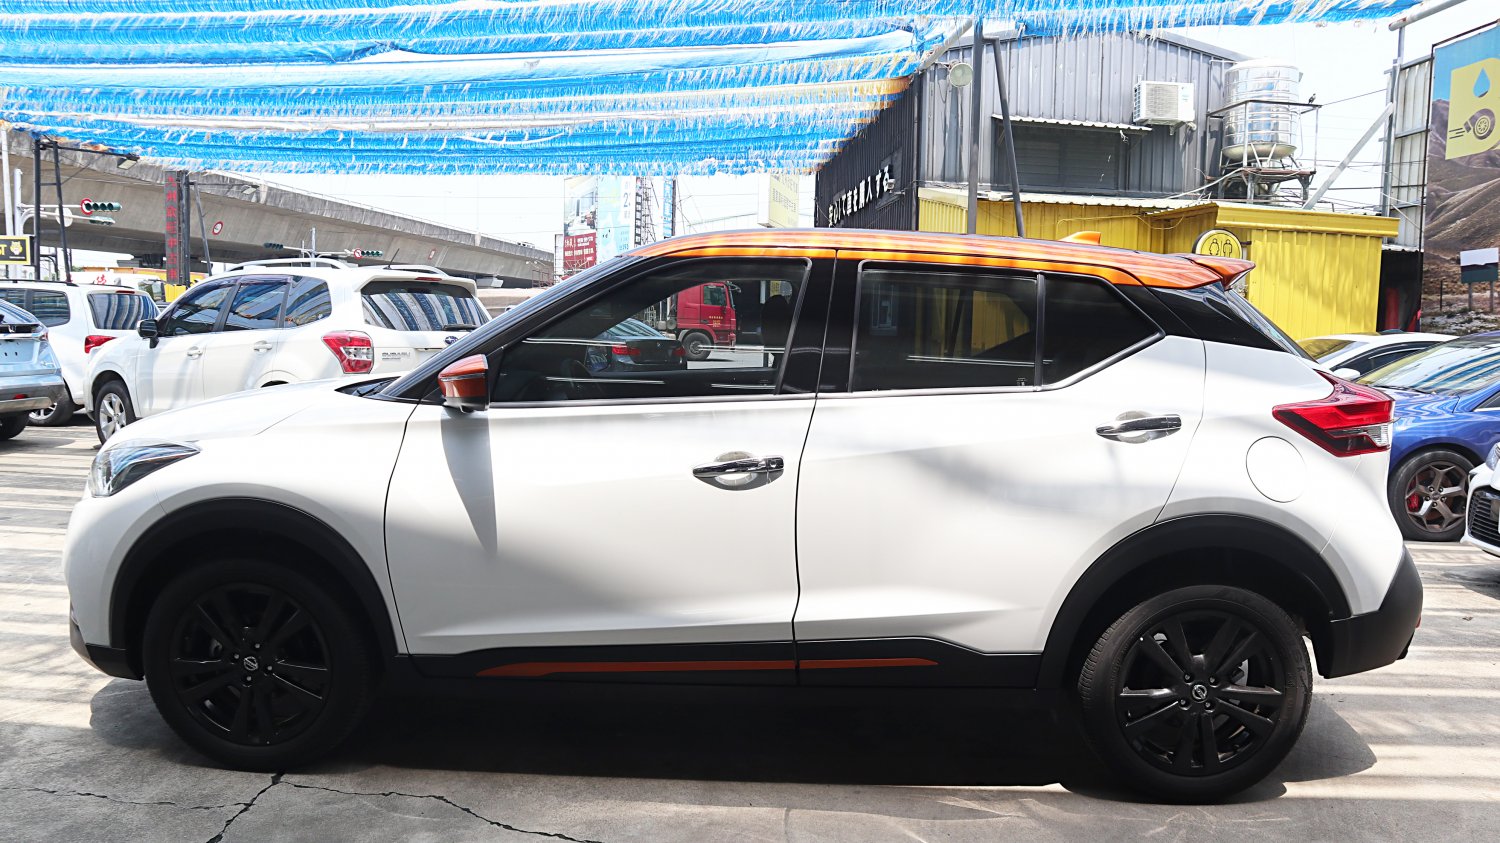 Nissan 日產 ／ Kicks ／ 2021年 ／ 2021年Nissan Kicks 橙黃白色 日產中古車 ／ MG車庫(台南)